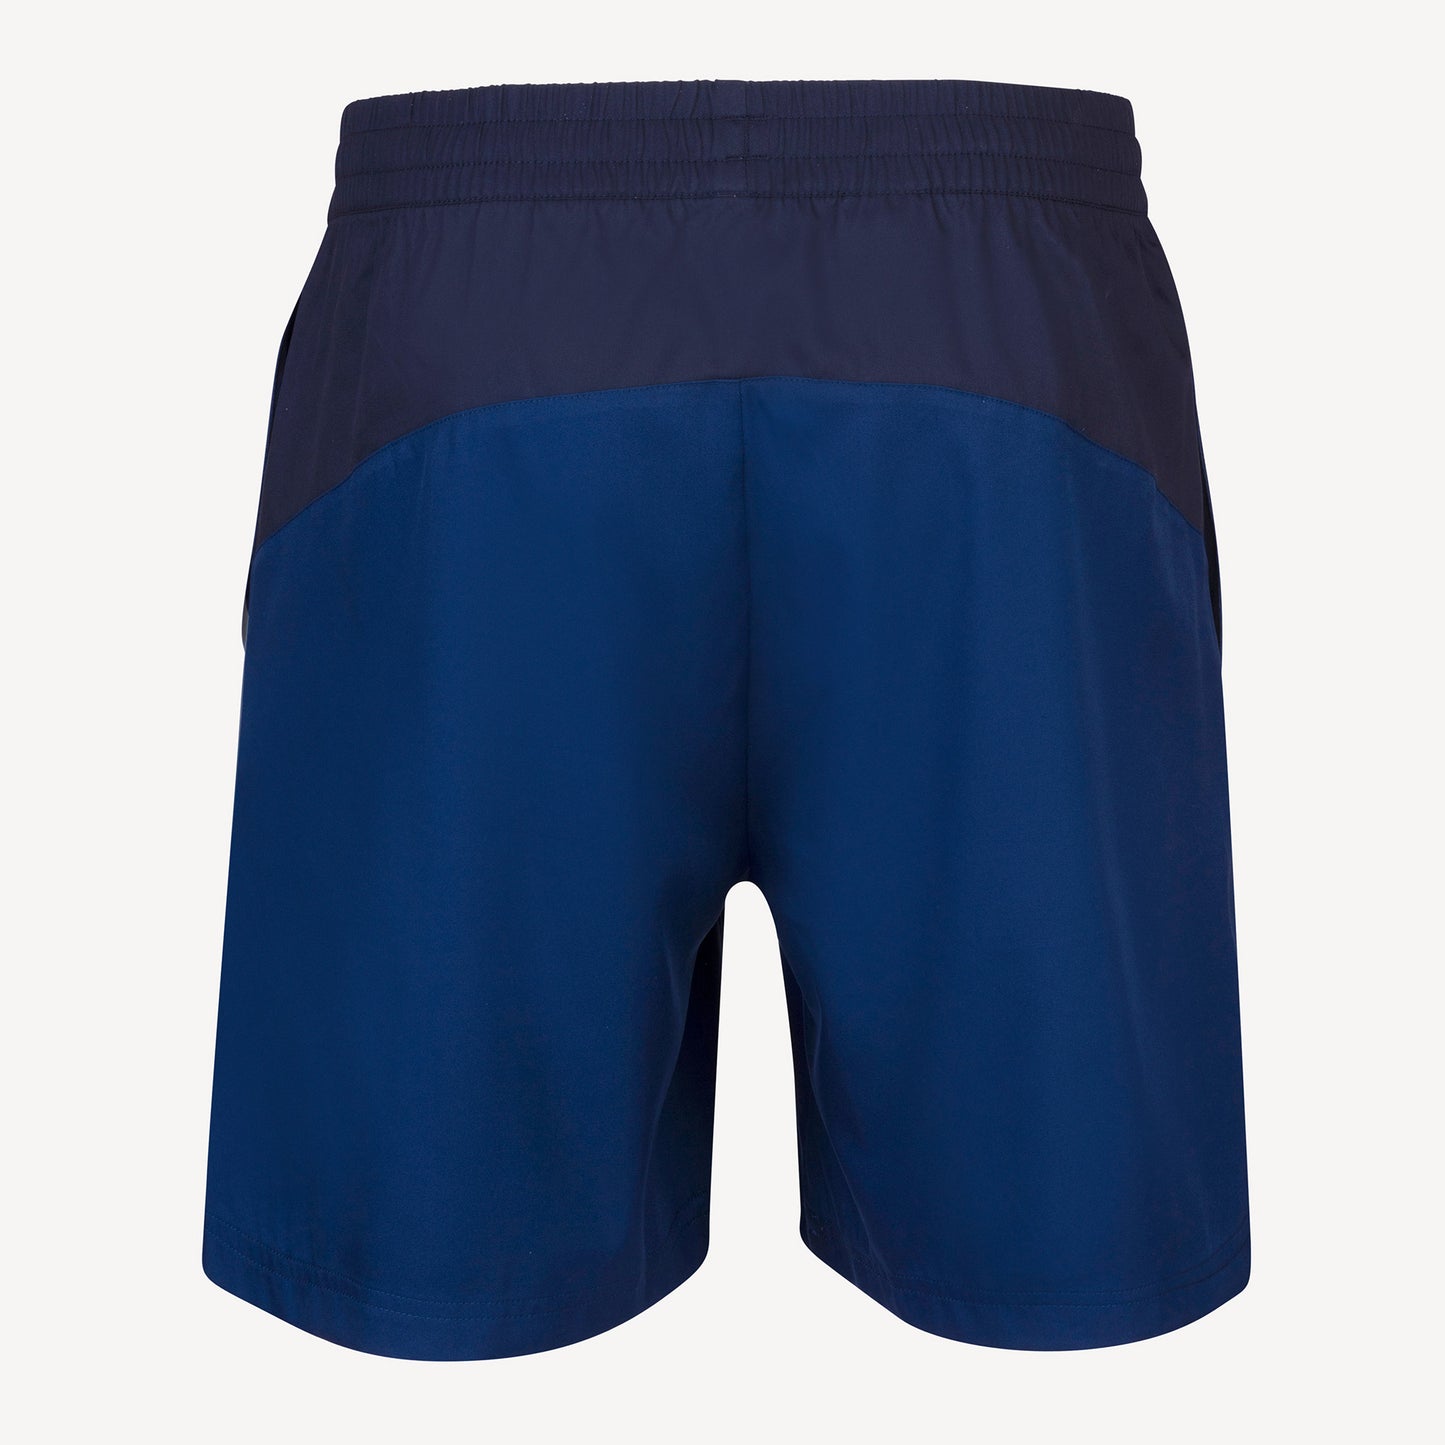 Babolat Play Club Men's Tennis Shorts Blue (2)